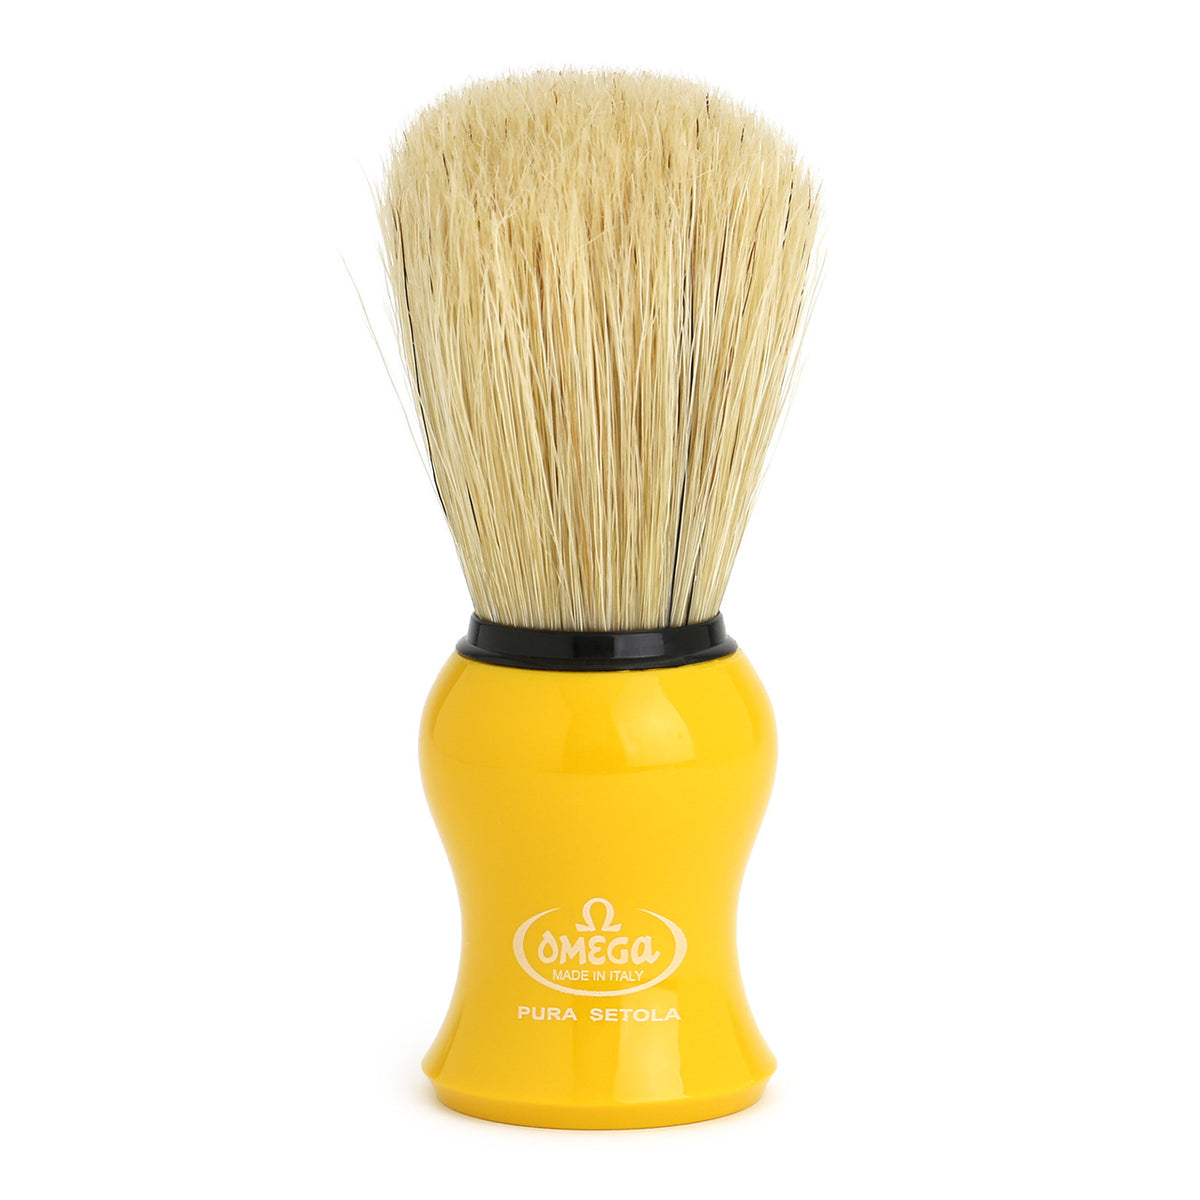 Omega Pure Bristle Shaving Brush 10065 yellow